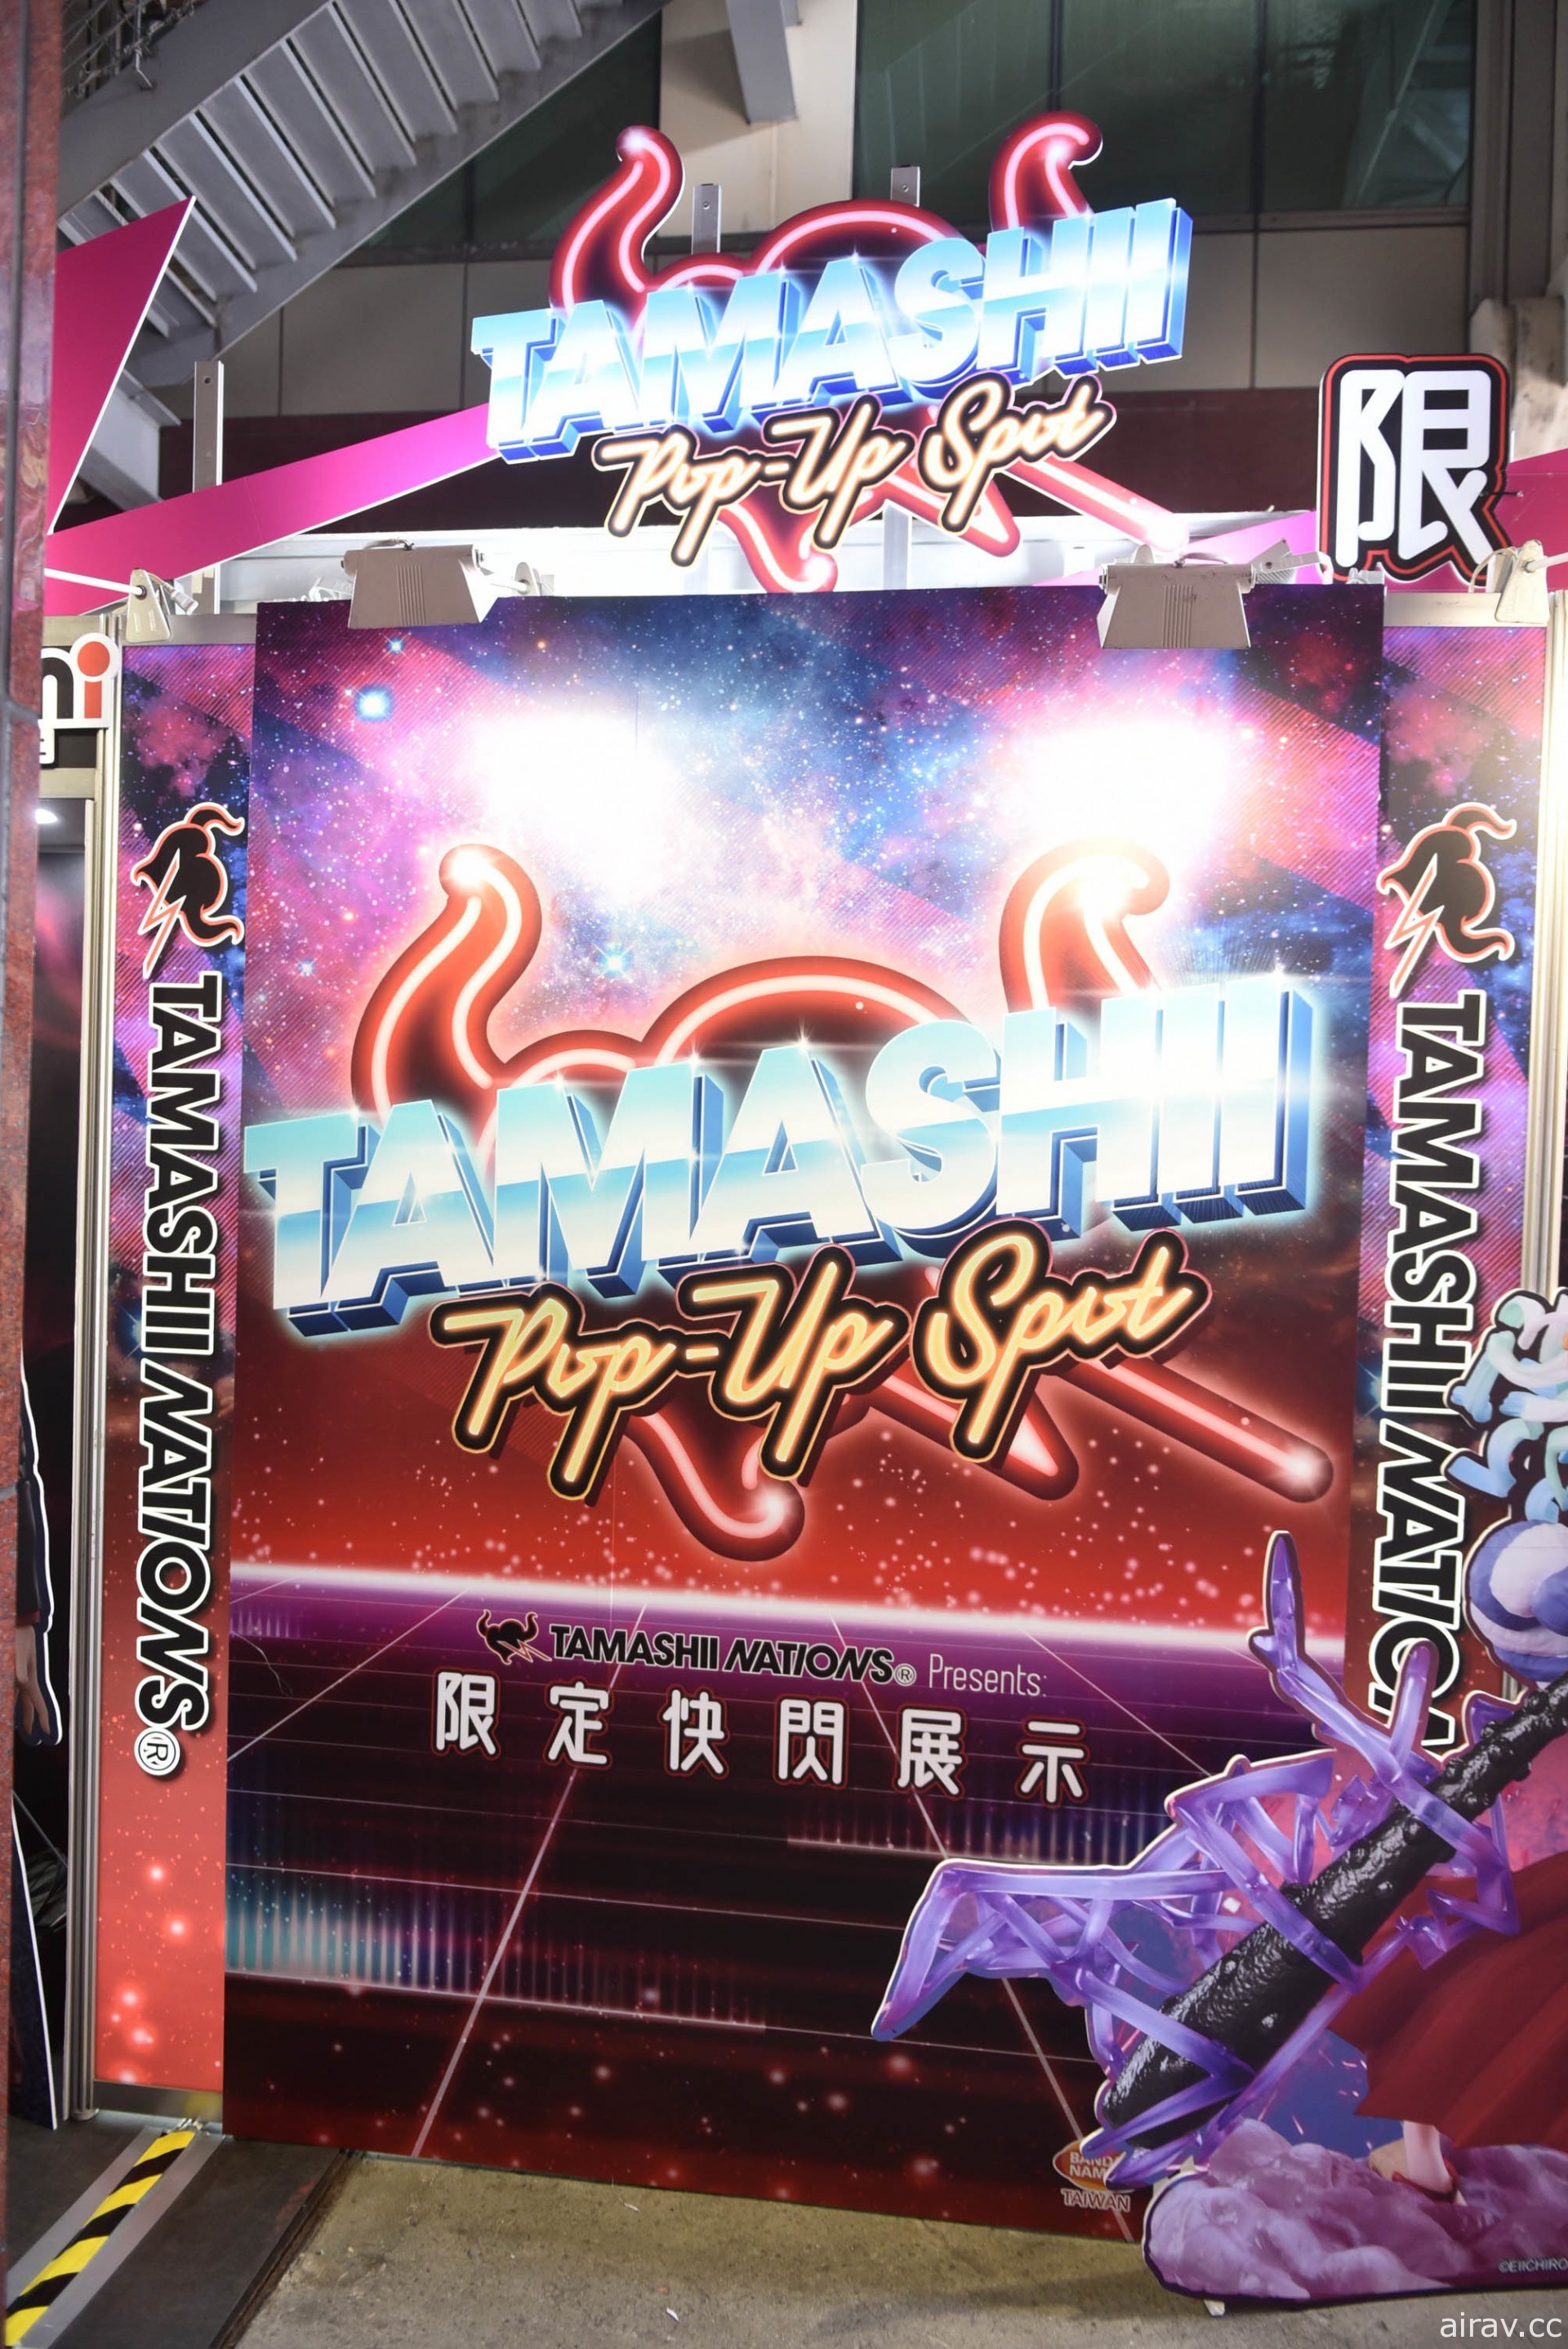 「TAMASHII POP UP SPOT 限定快閃展示」為期三日於台中登場